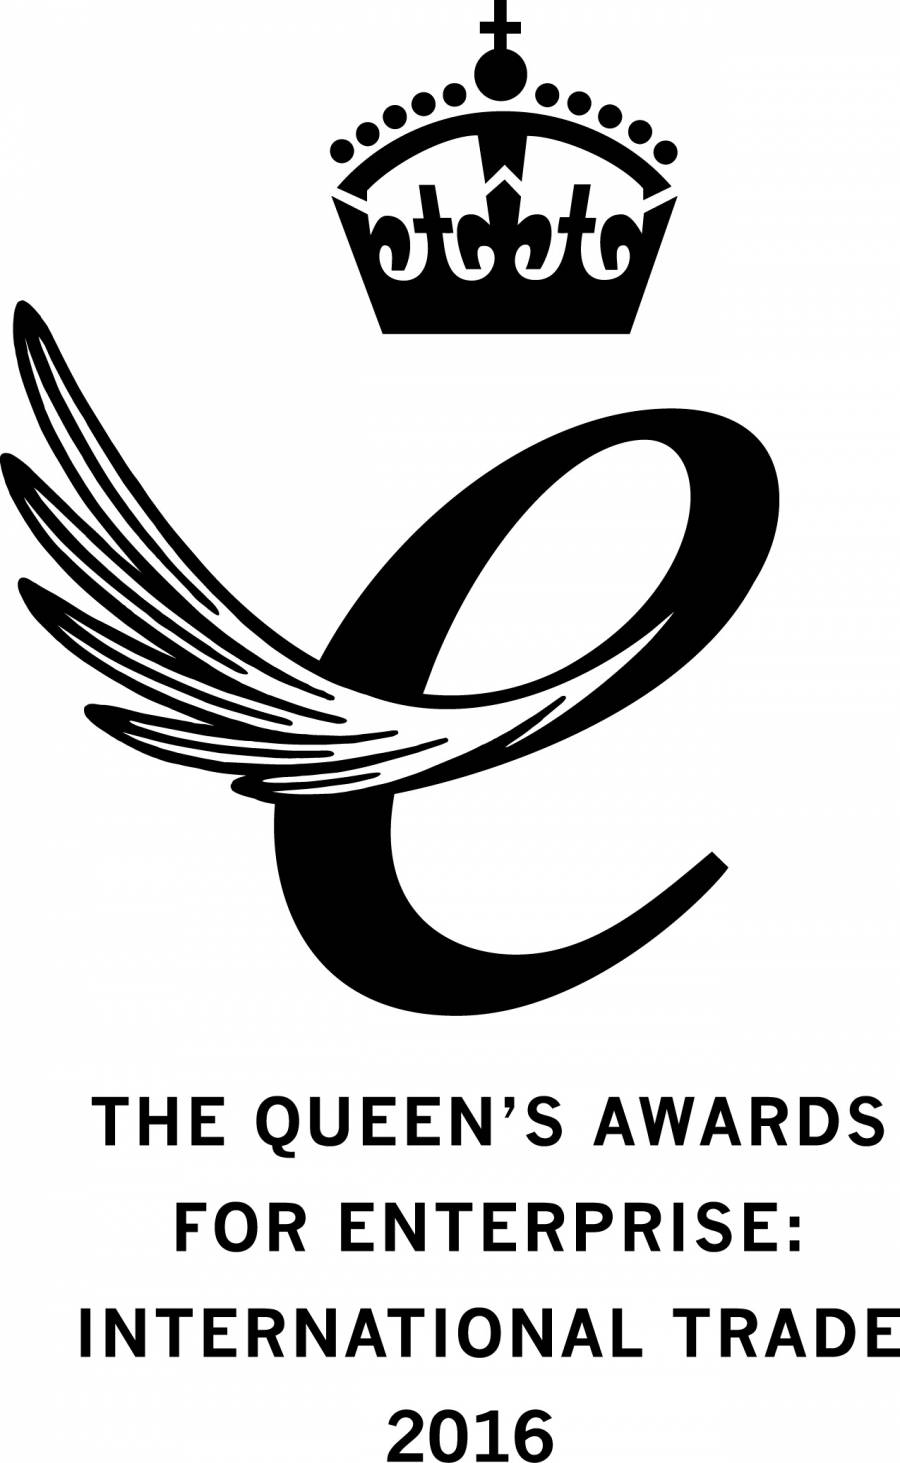 Export success brings Queen’s Award to Gloucester stalwart